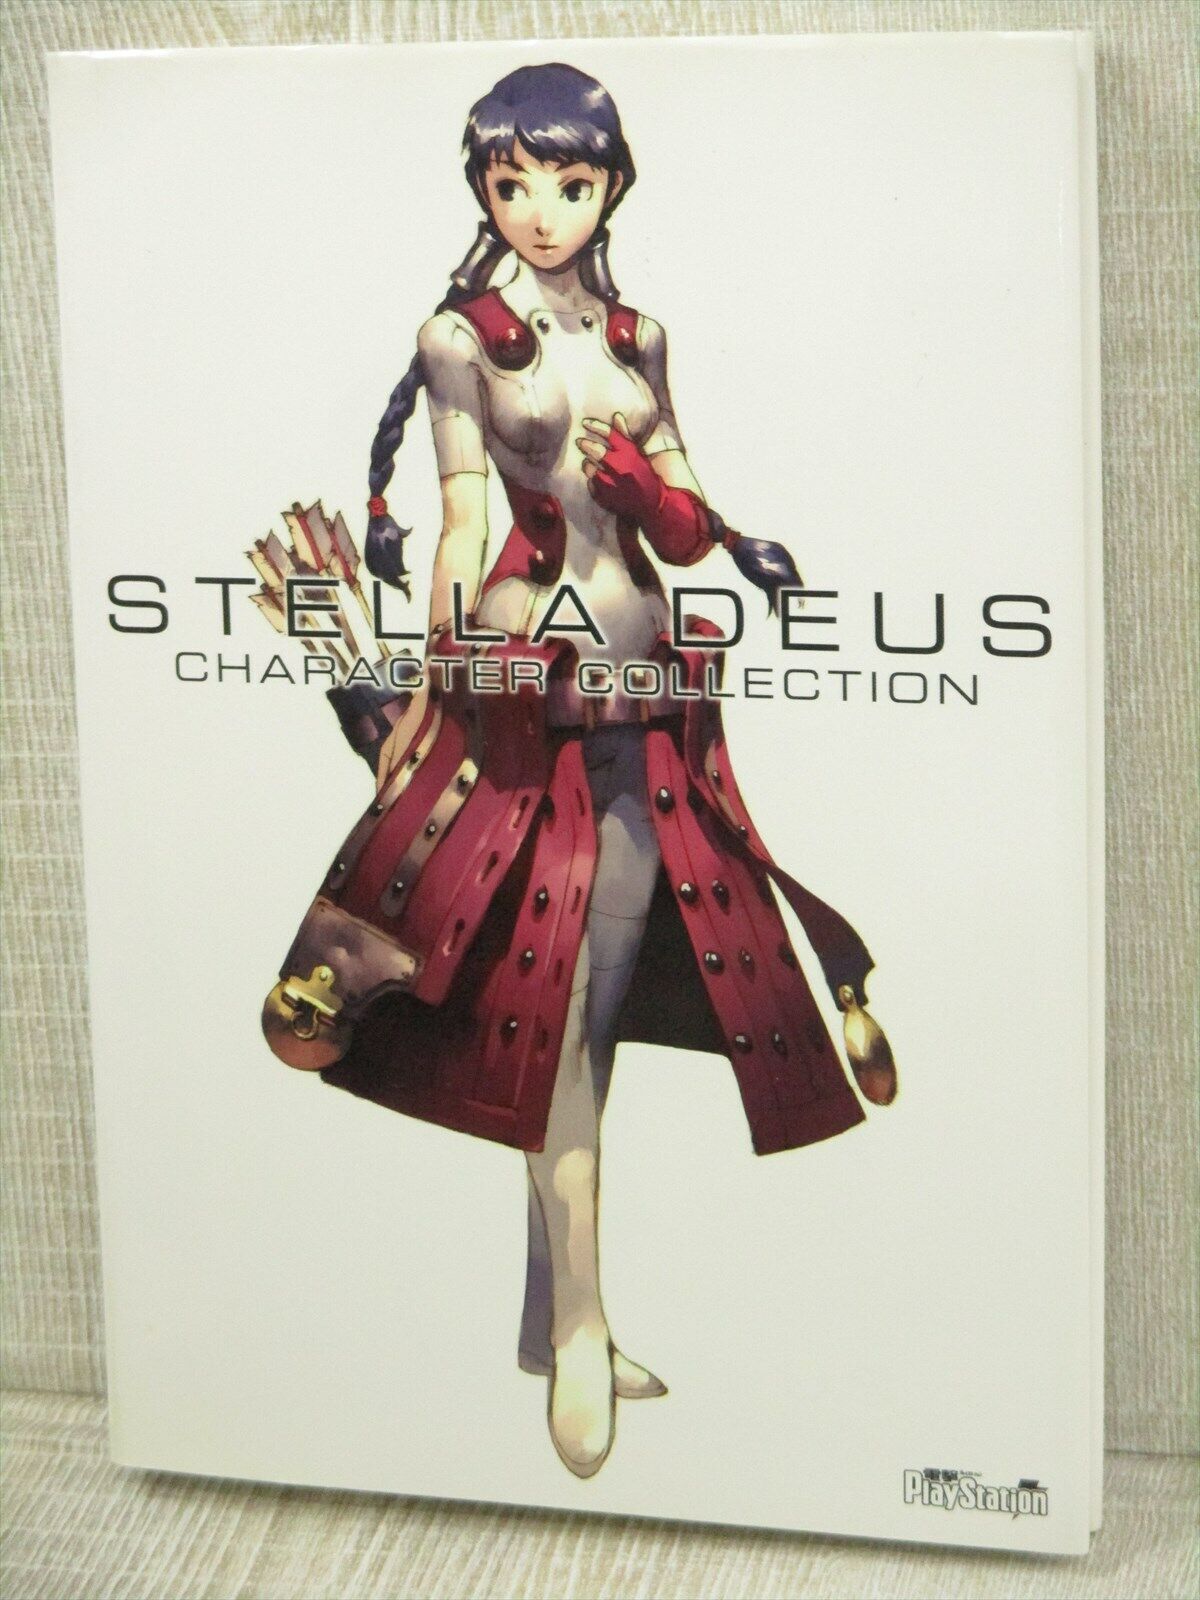 STELLA DEUS Character Collection SHIGENORI SOEJIMA Art Works Book 2005 MV80*